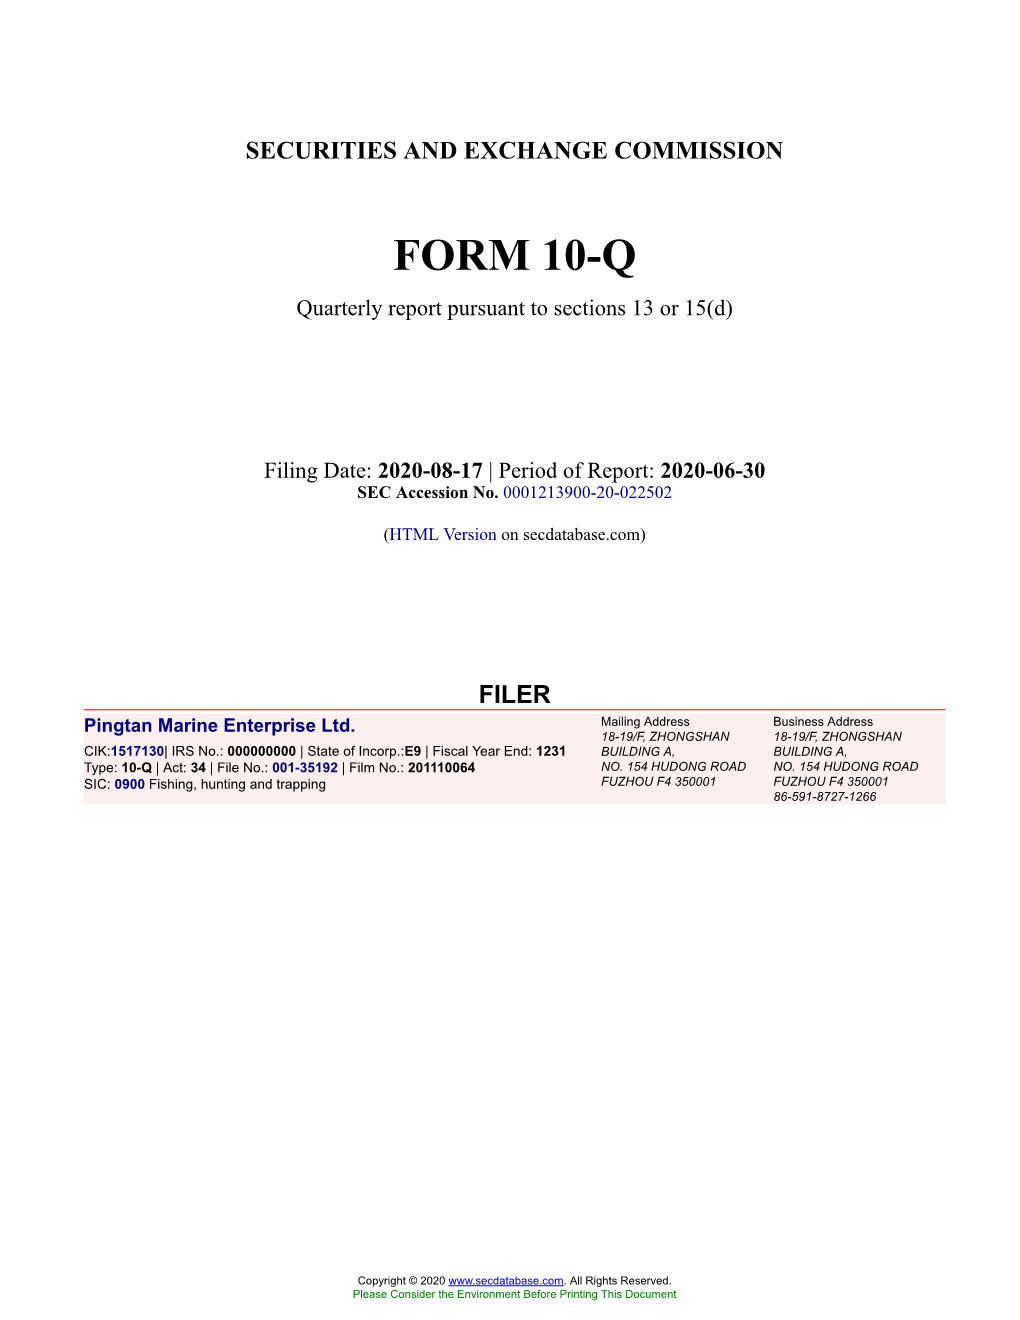 Pingtan Marine Enterprise Ltd. Form 10-Q Quarterly Report Filed